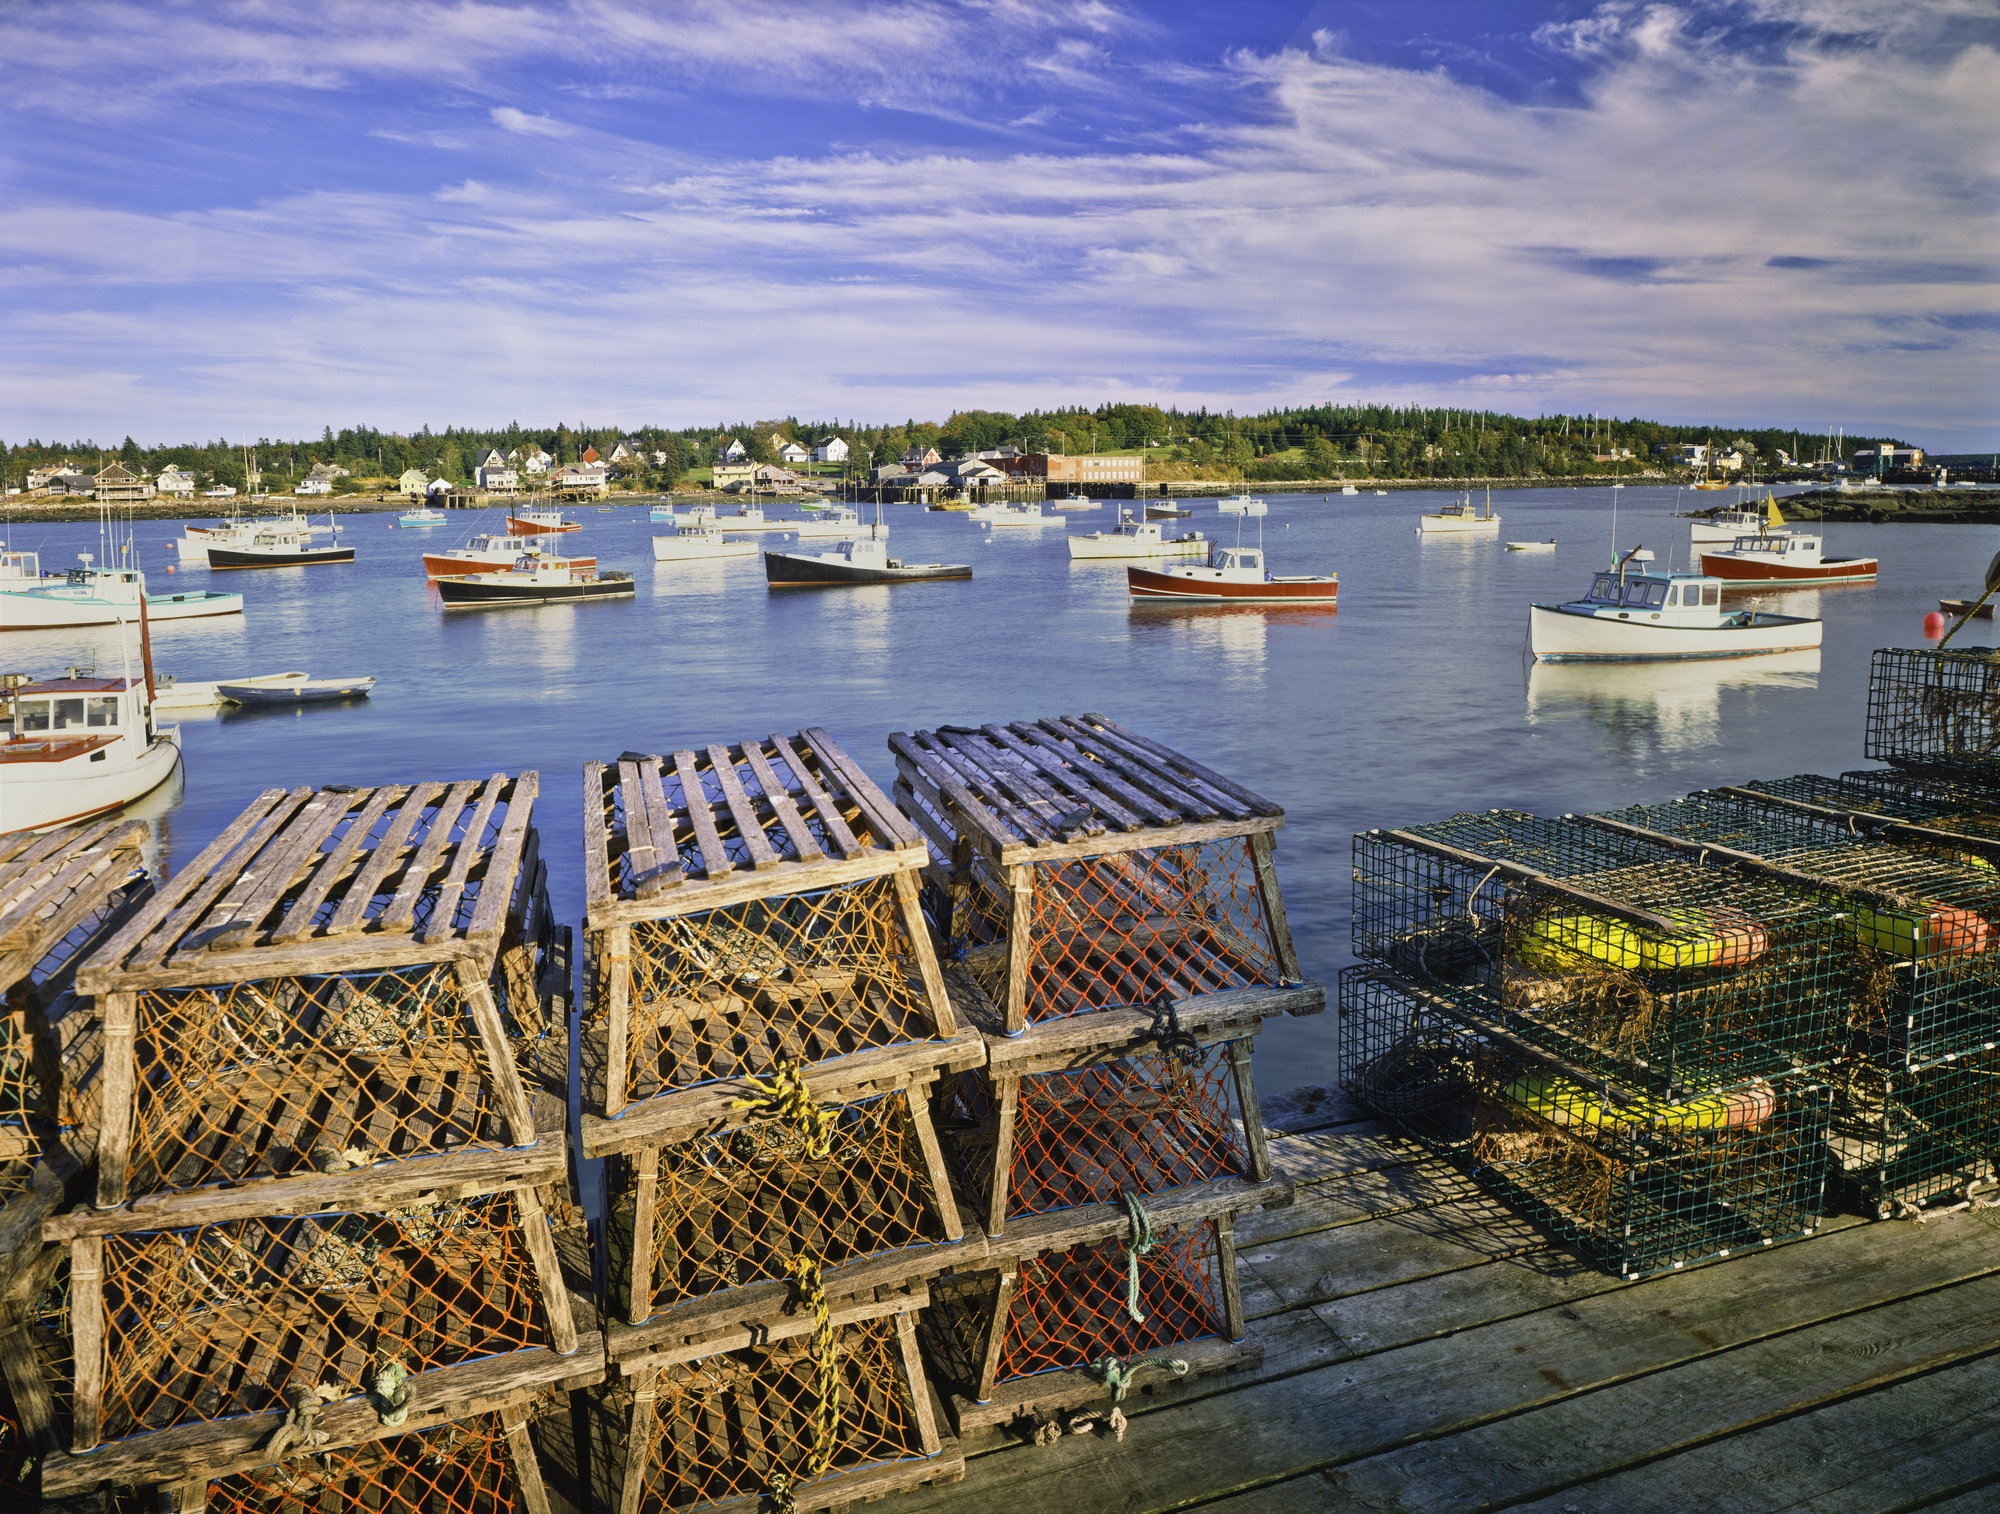 Image of fishing boats at Bass Harbor Maine. July 2021.